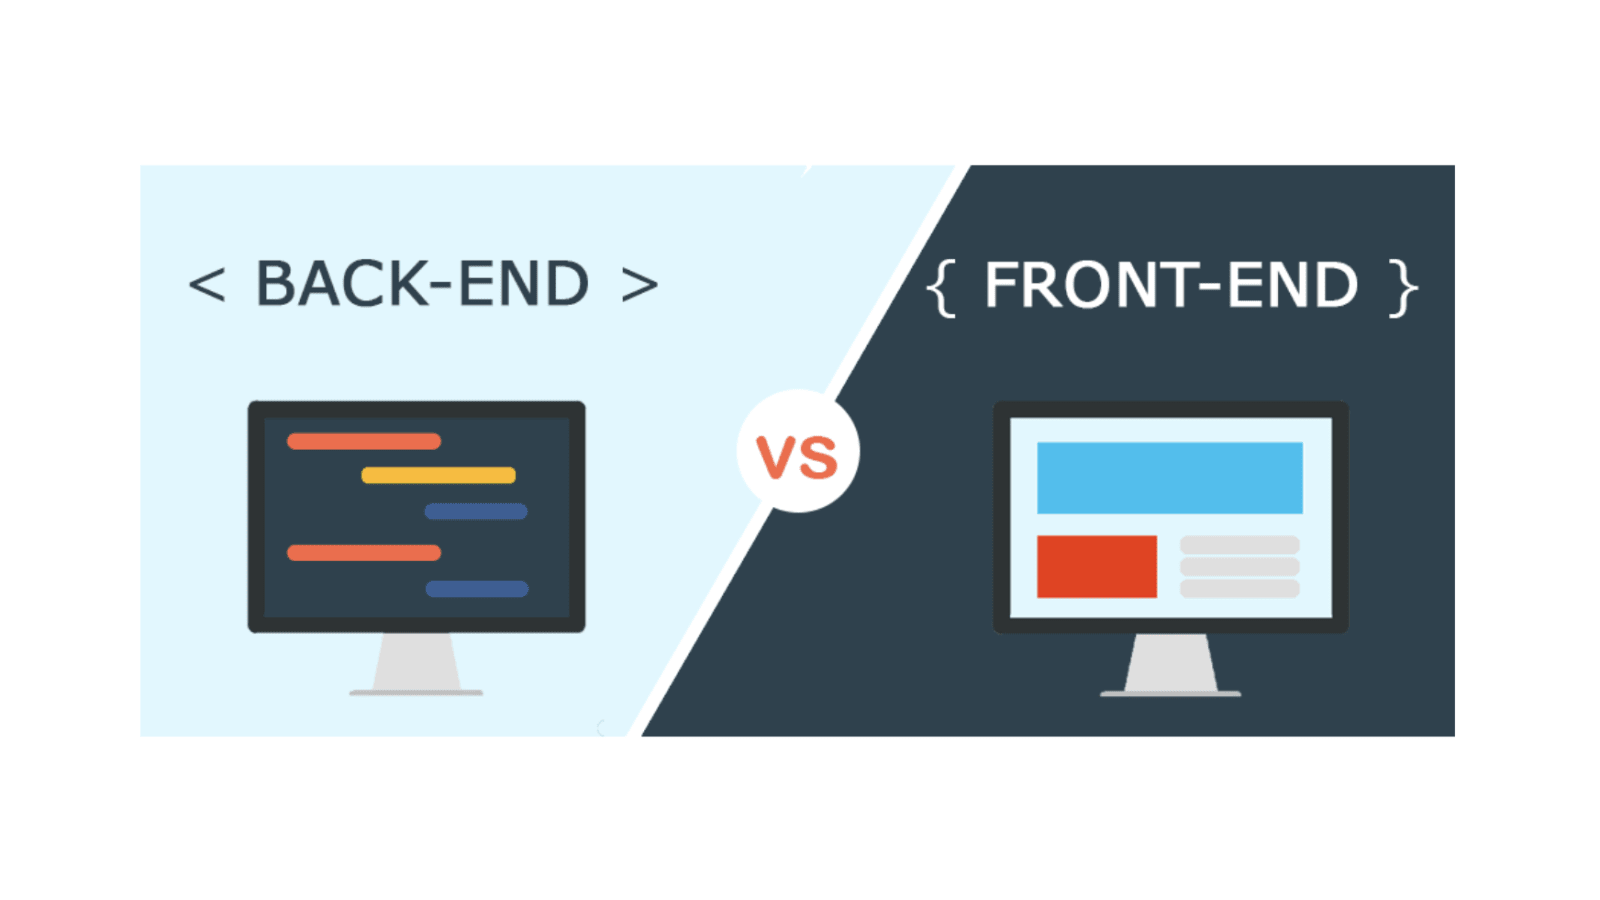 An infographic depicting back-end web development vs. front-end web development.